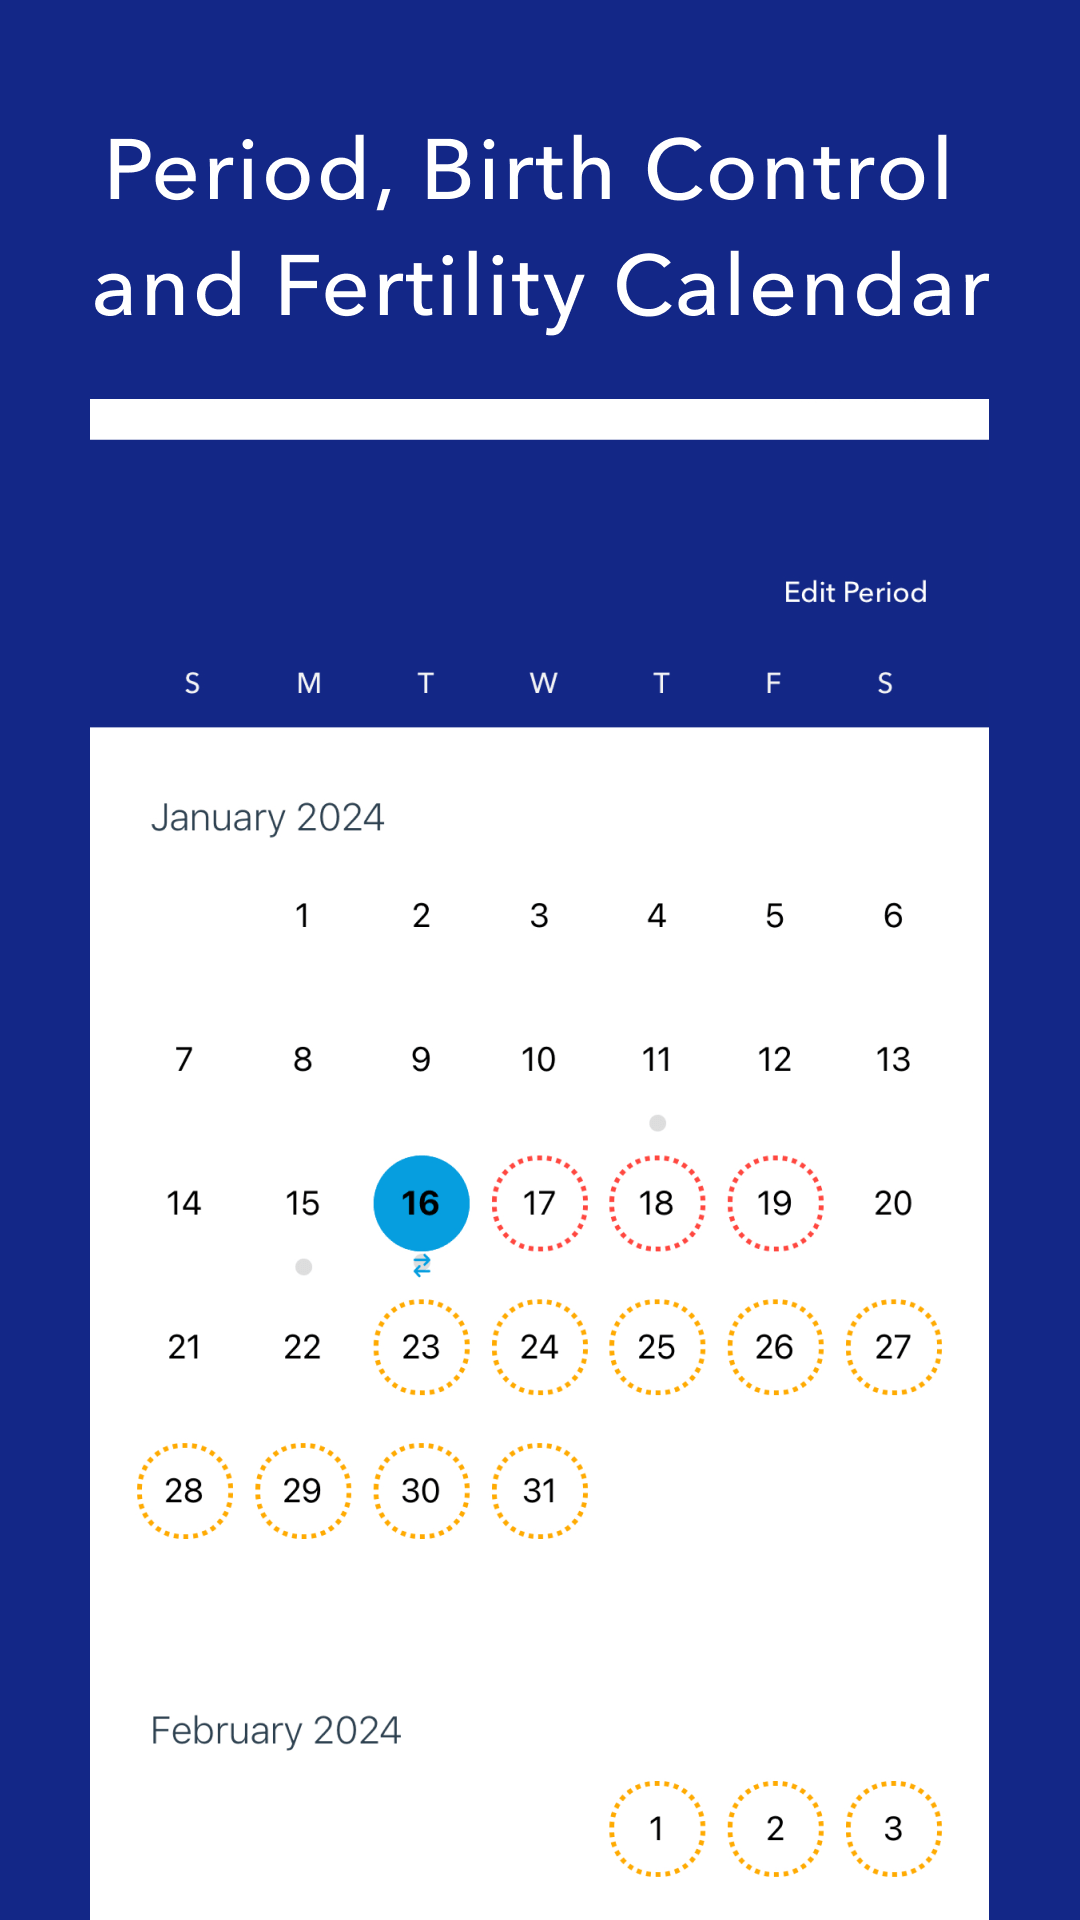 Spot on calendar shows fertility window